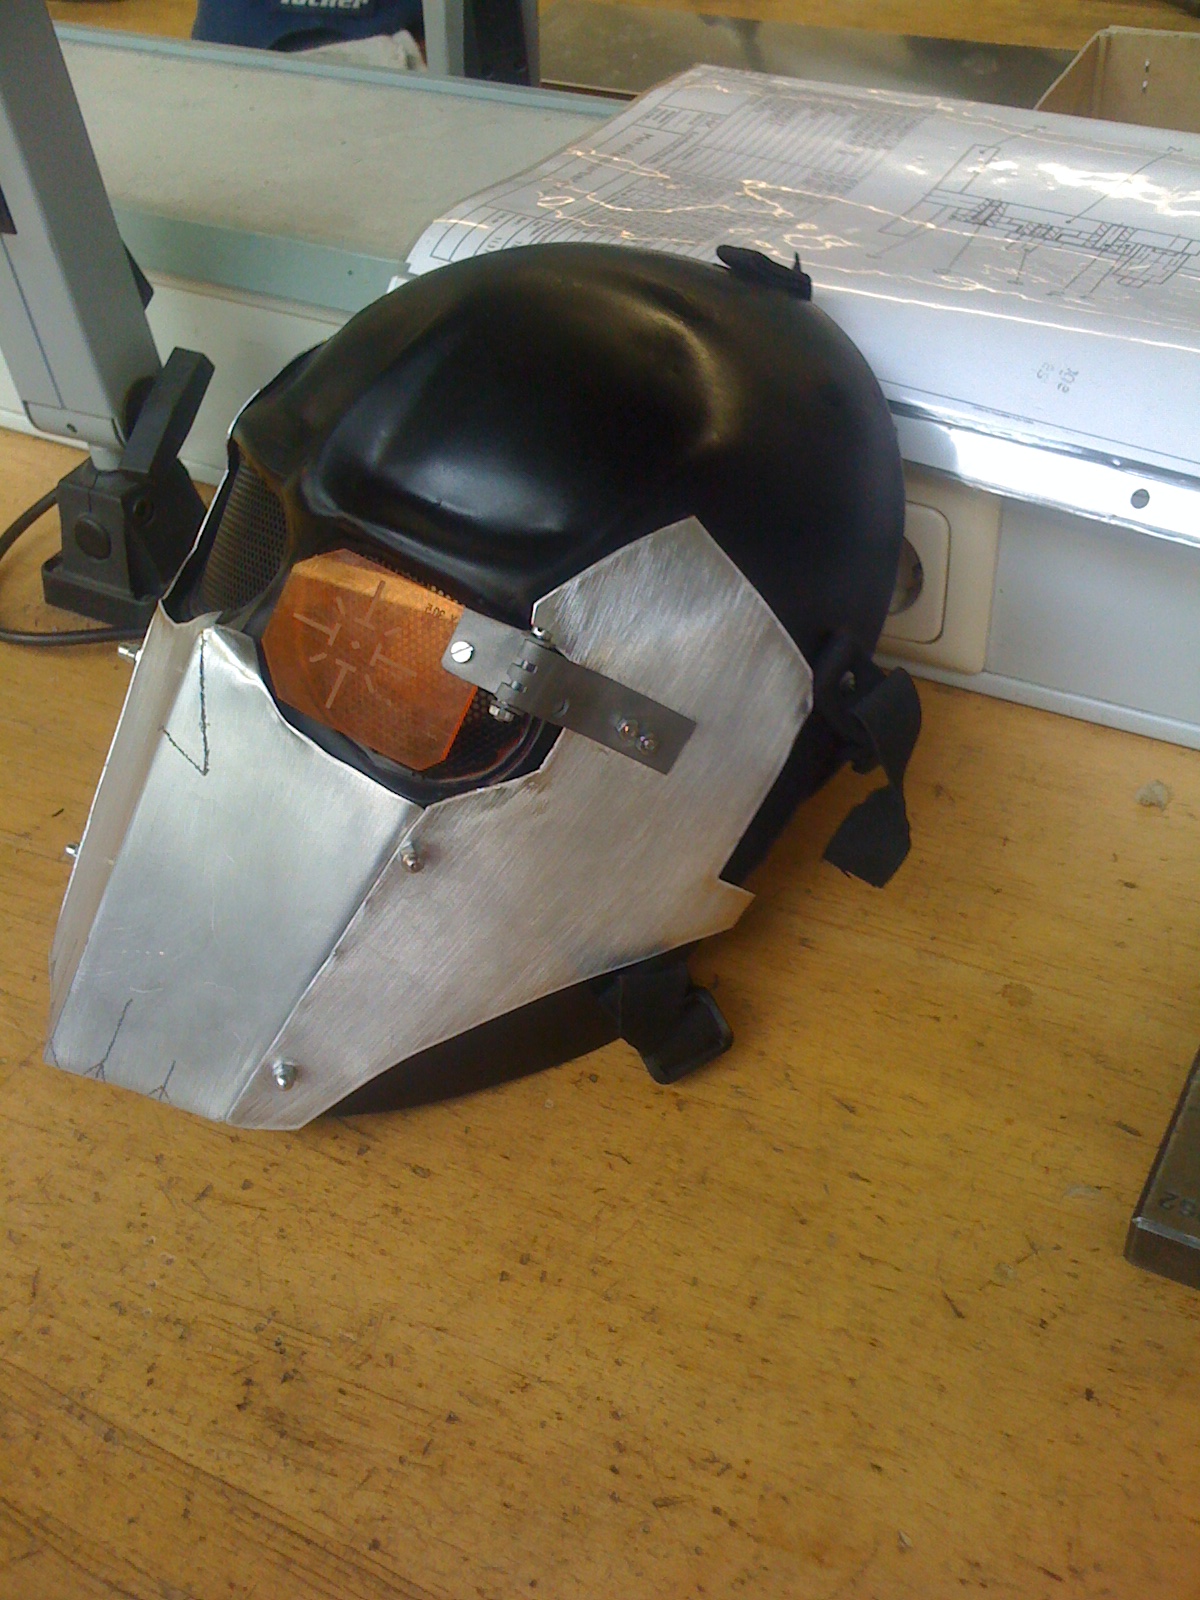 Meine Maske 1
Airsoft maske selbst umgerüstet.